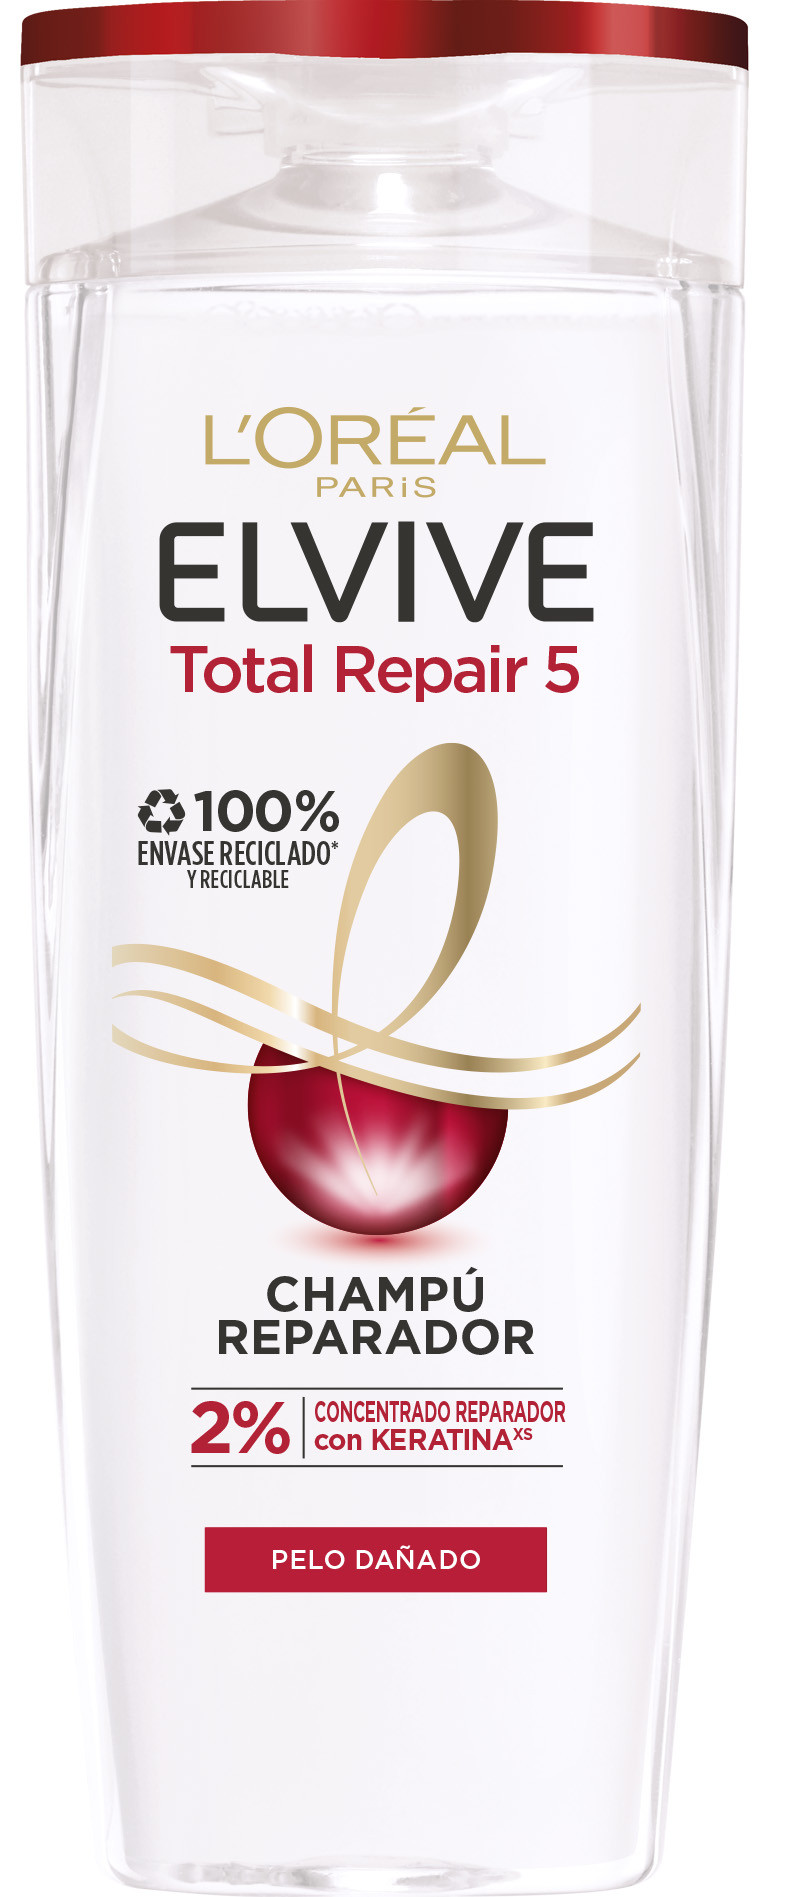 L'Oréal París ELVIVE Total Repair 5 Champú Reparador